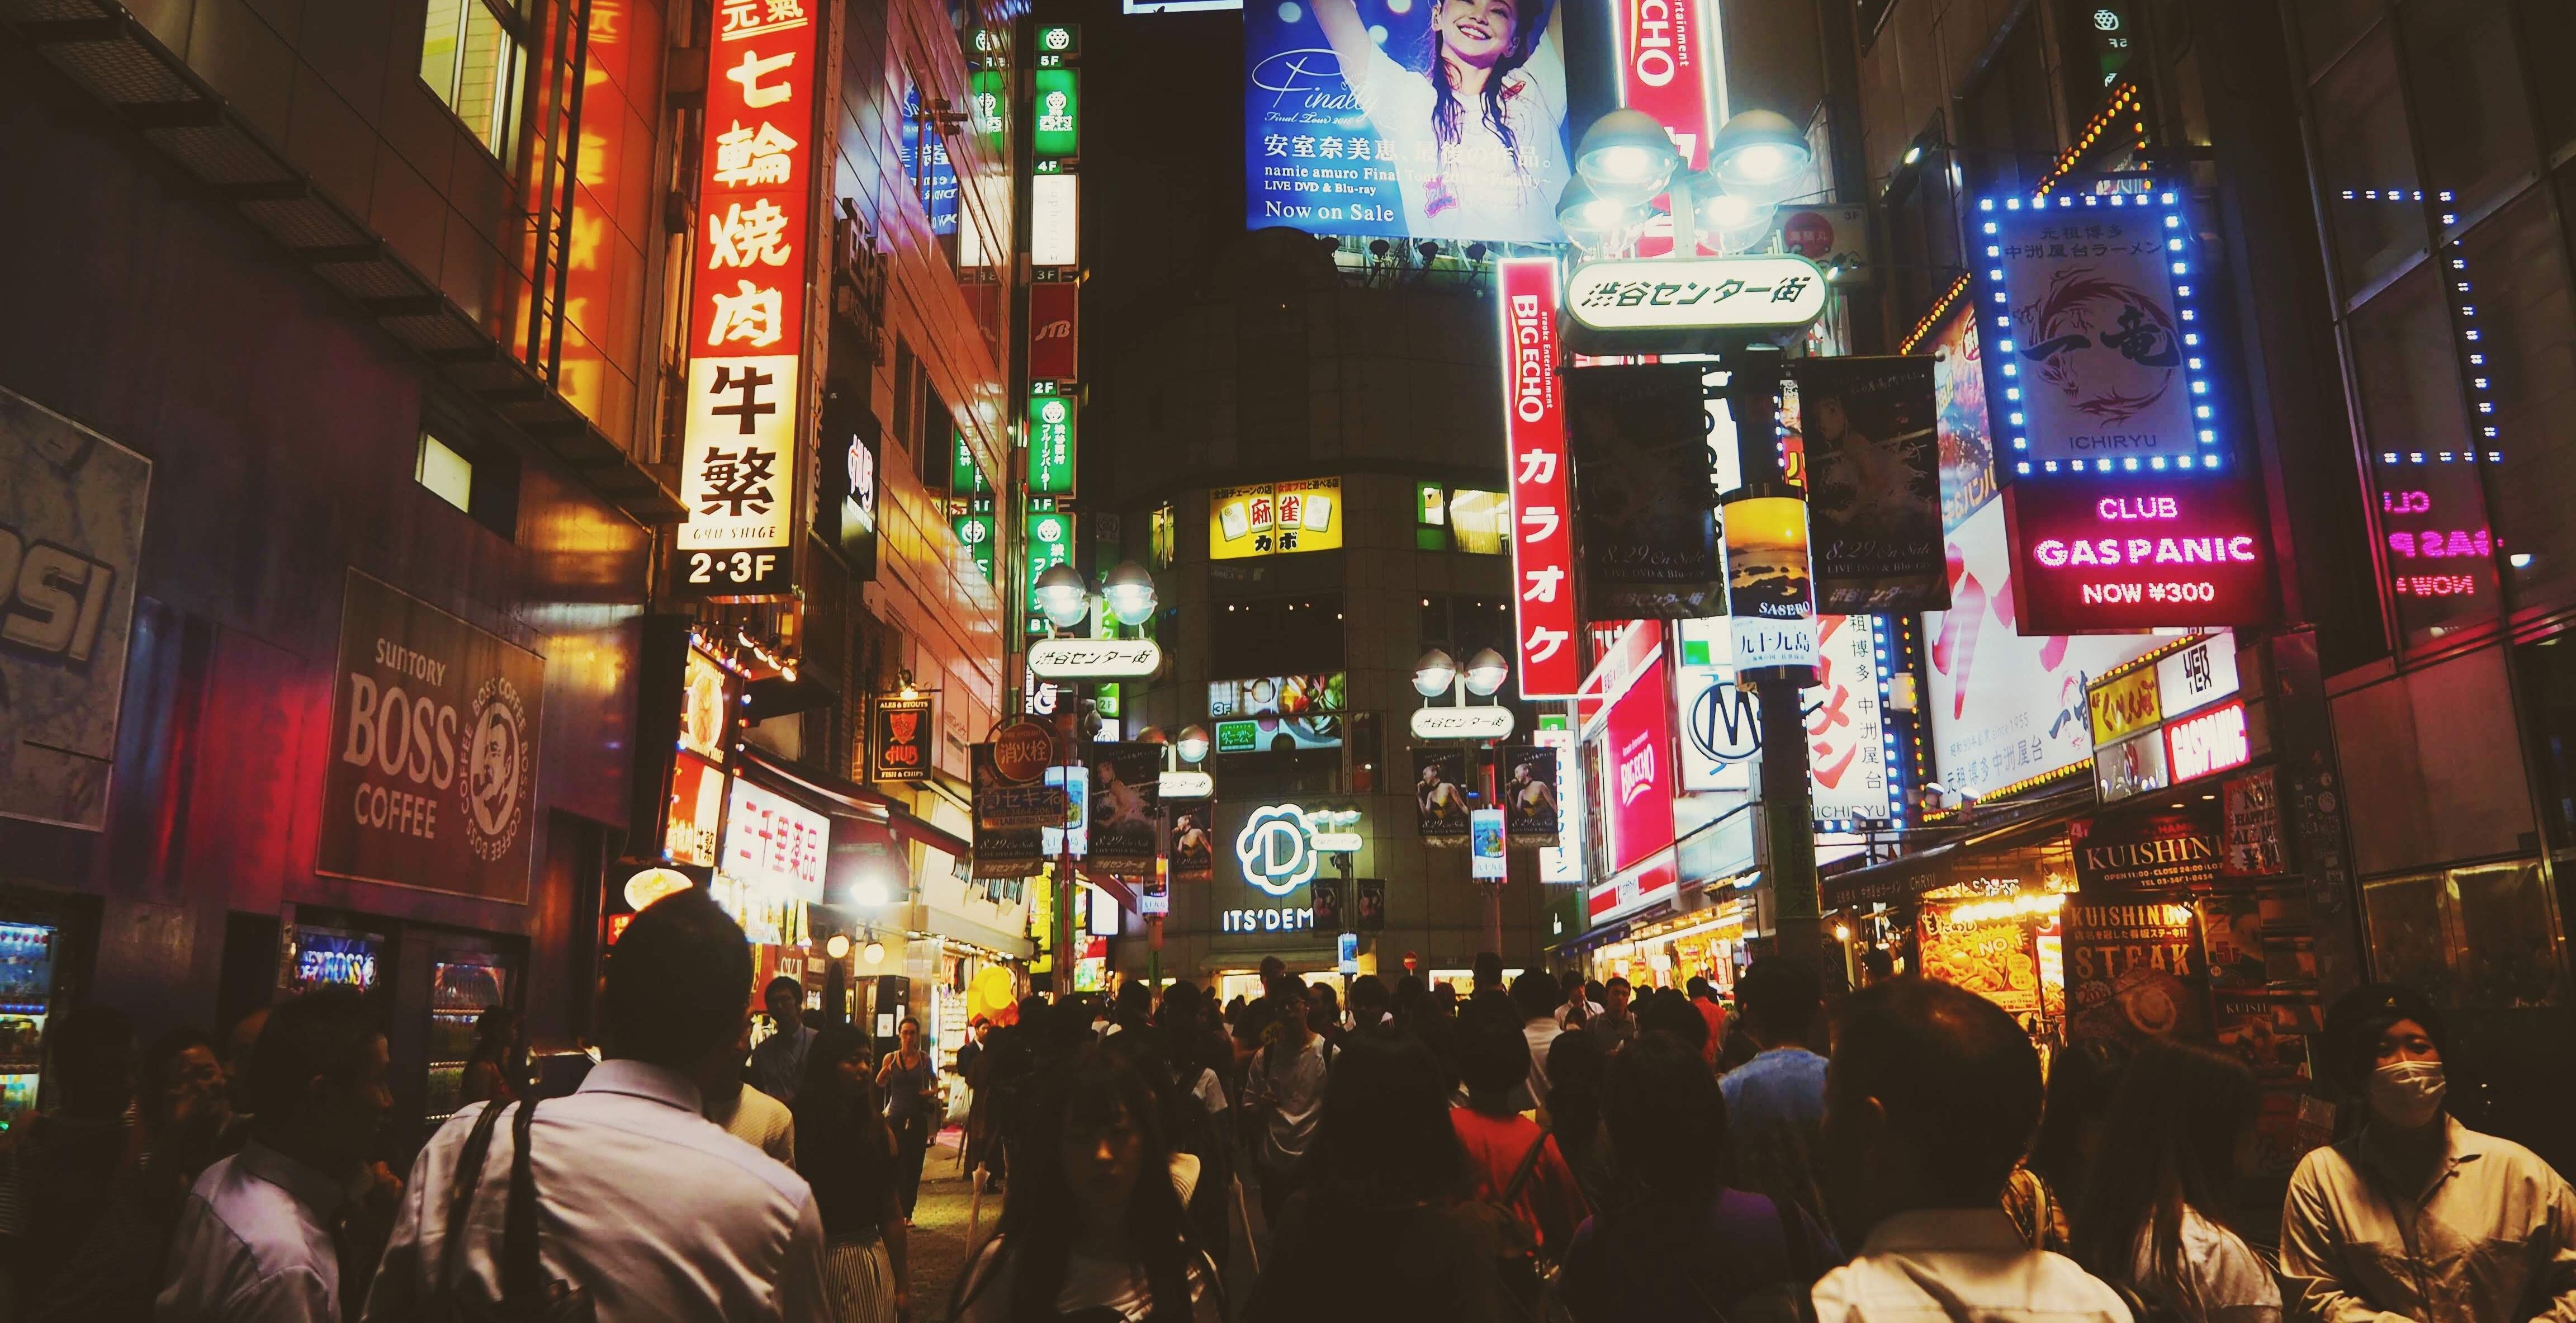 tokyo street at night